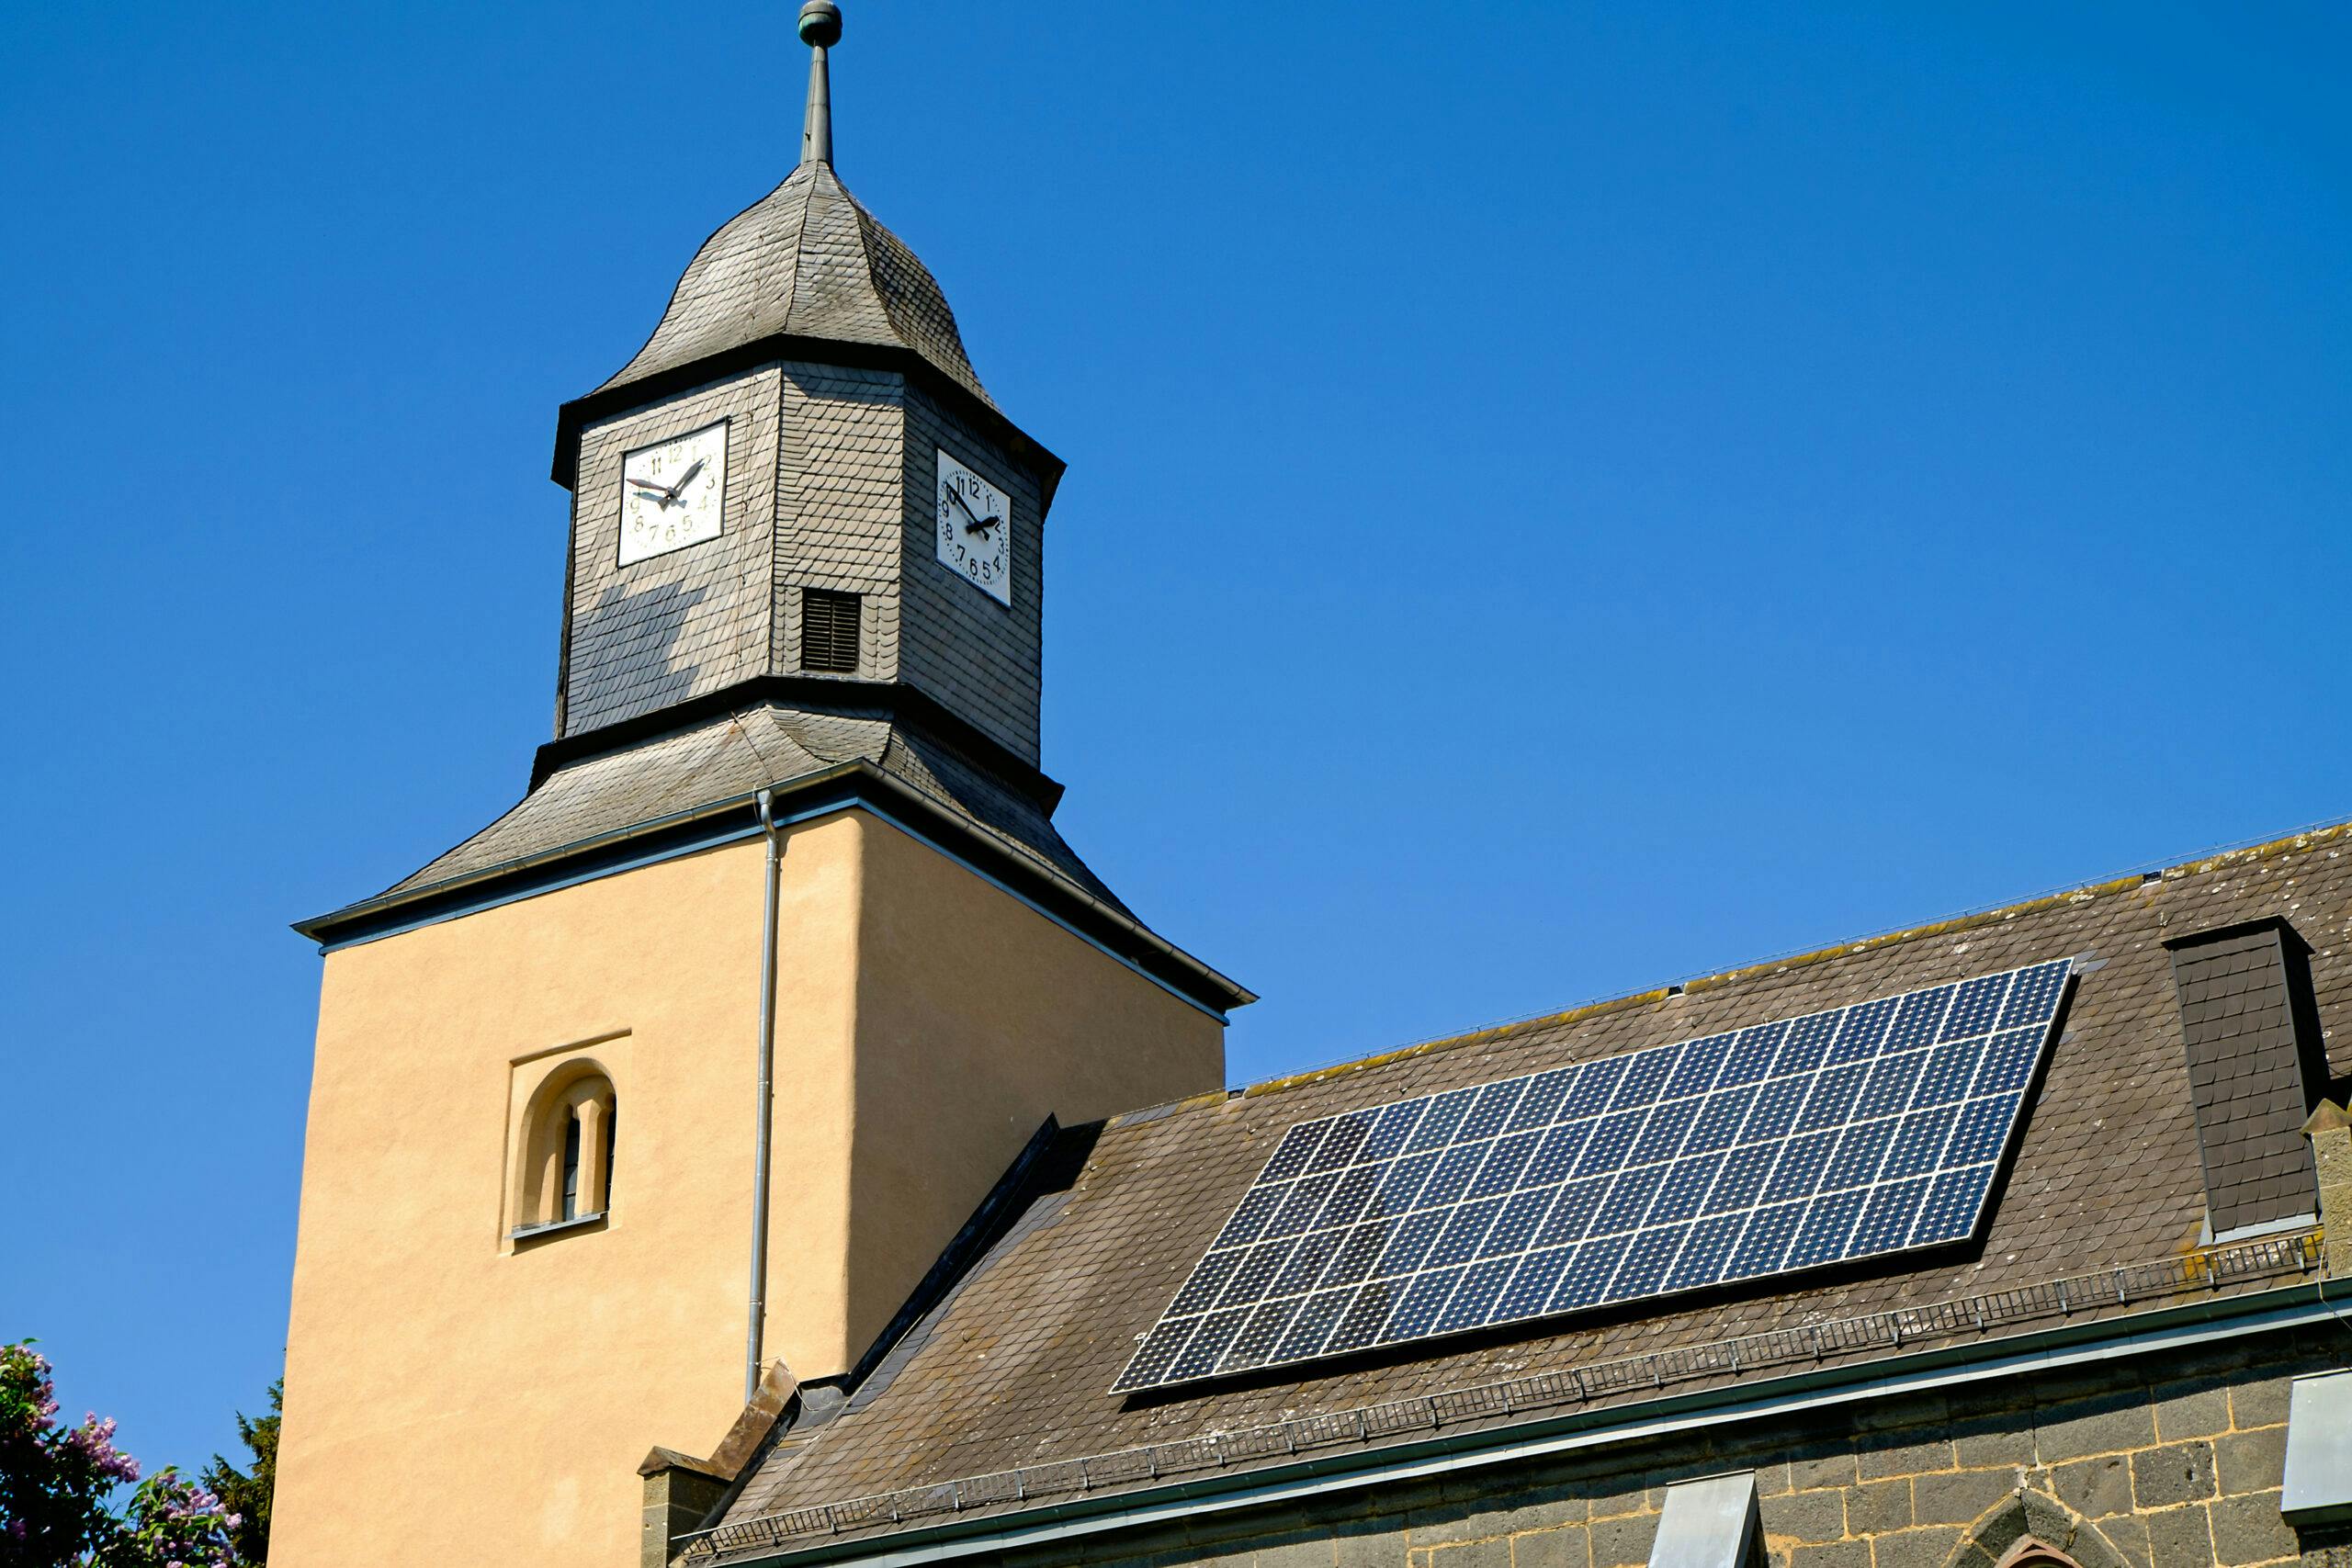 Church with solar panels